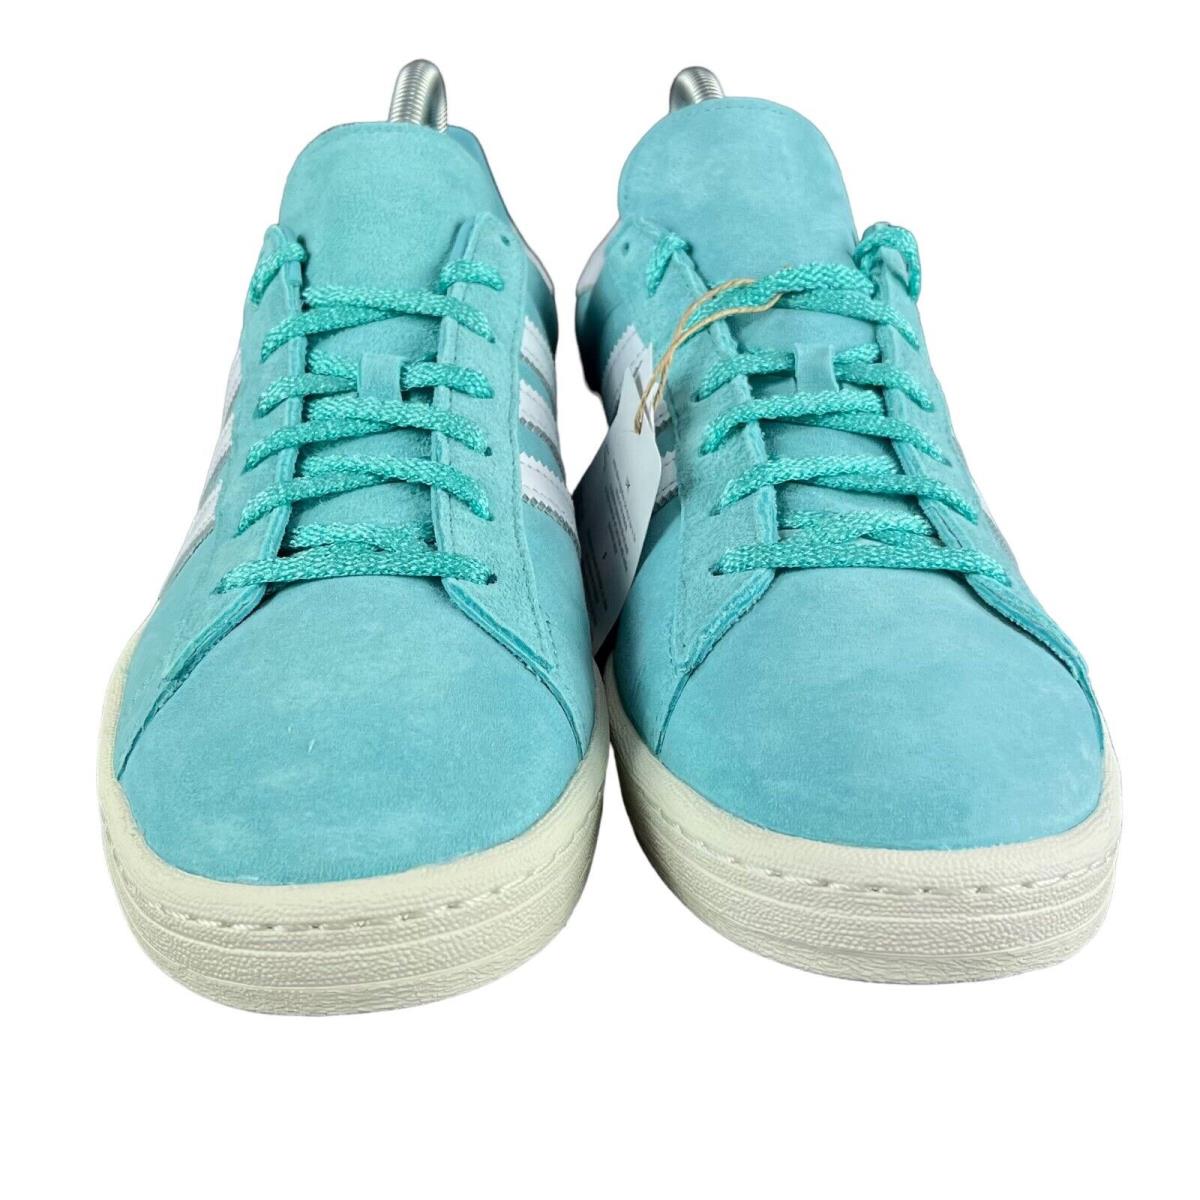 Adidas Originals Campus 80s Turquoise White Suede Shoes ID7318 Men`s Sizes 7-13